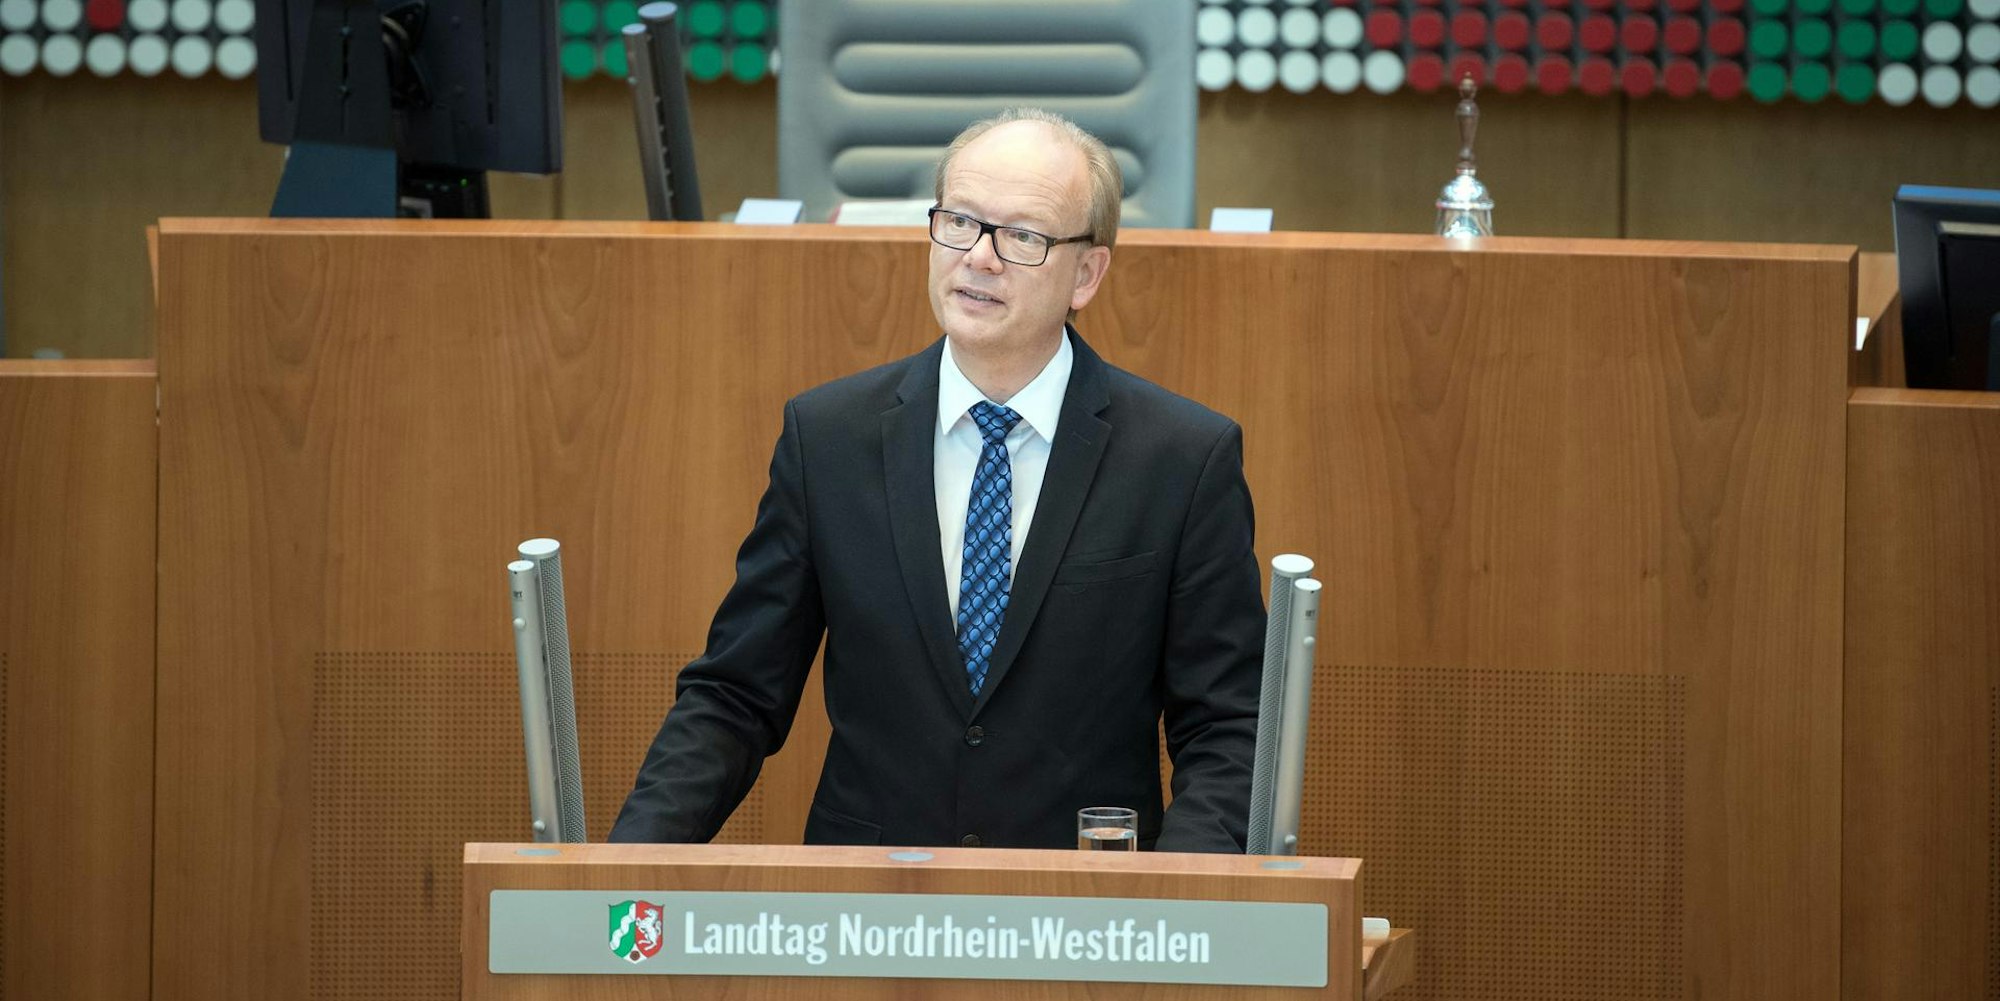 Landtagspräsident André Kuper von der CDU